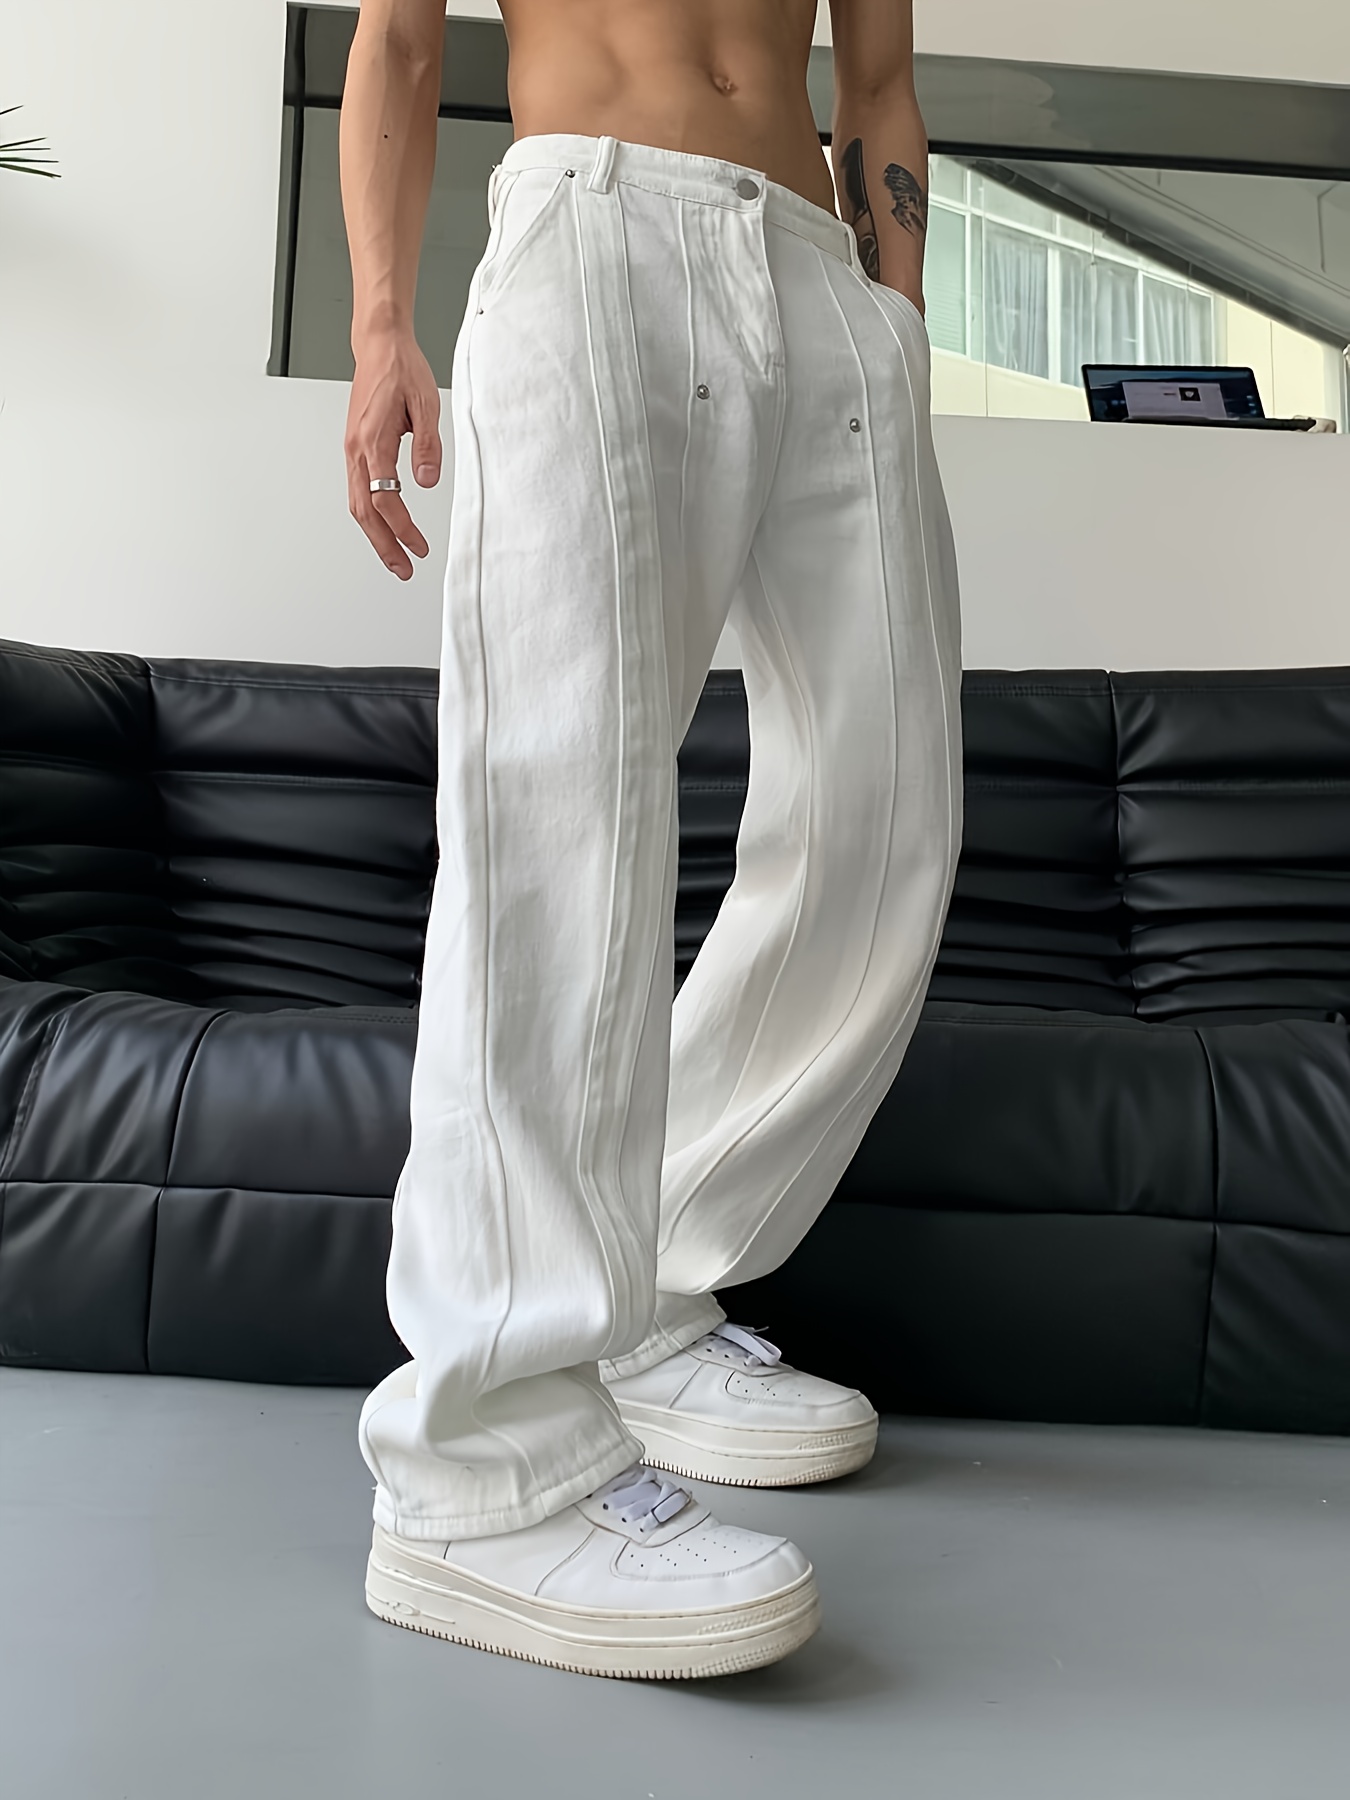 Pantalones informales de algodón para hombre, pantalón largo